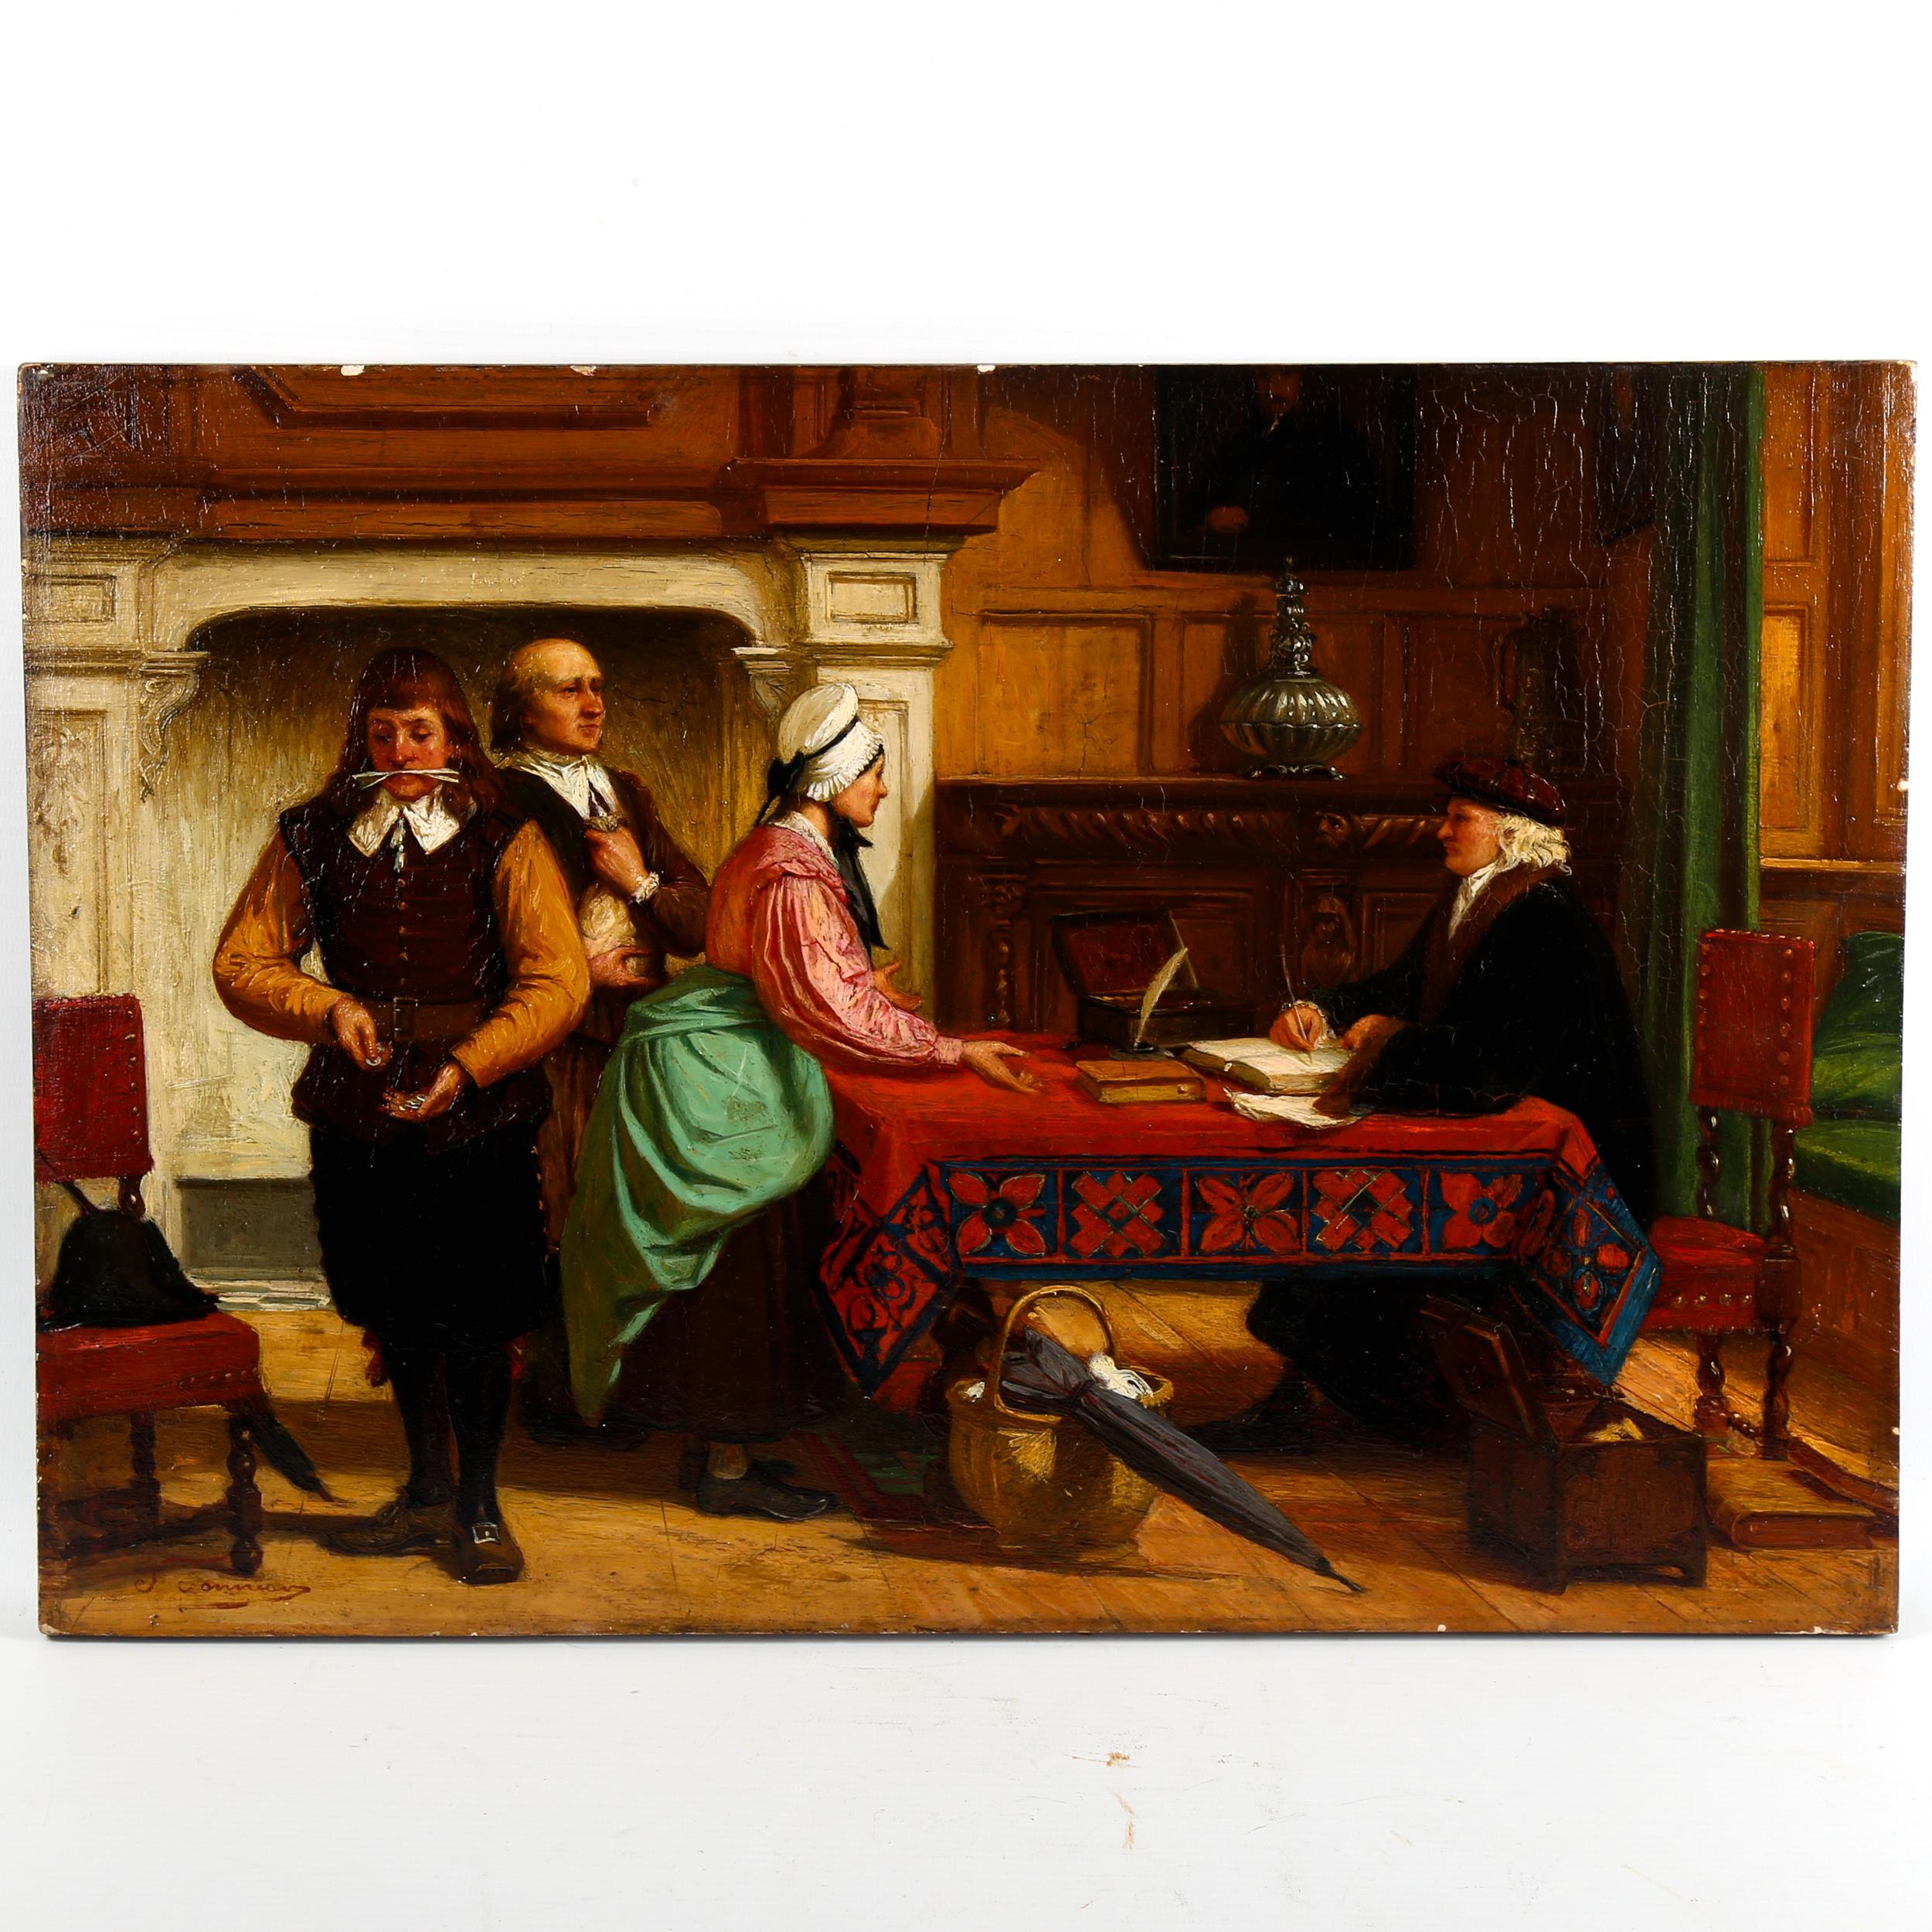 Joseph Tonneau, 19th century oil on wood panel, the debt collector, signed, 35cm x 51cm, unframed